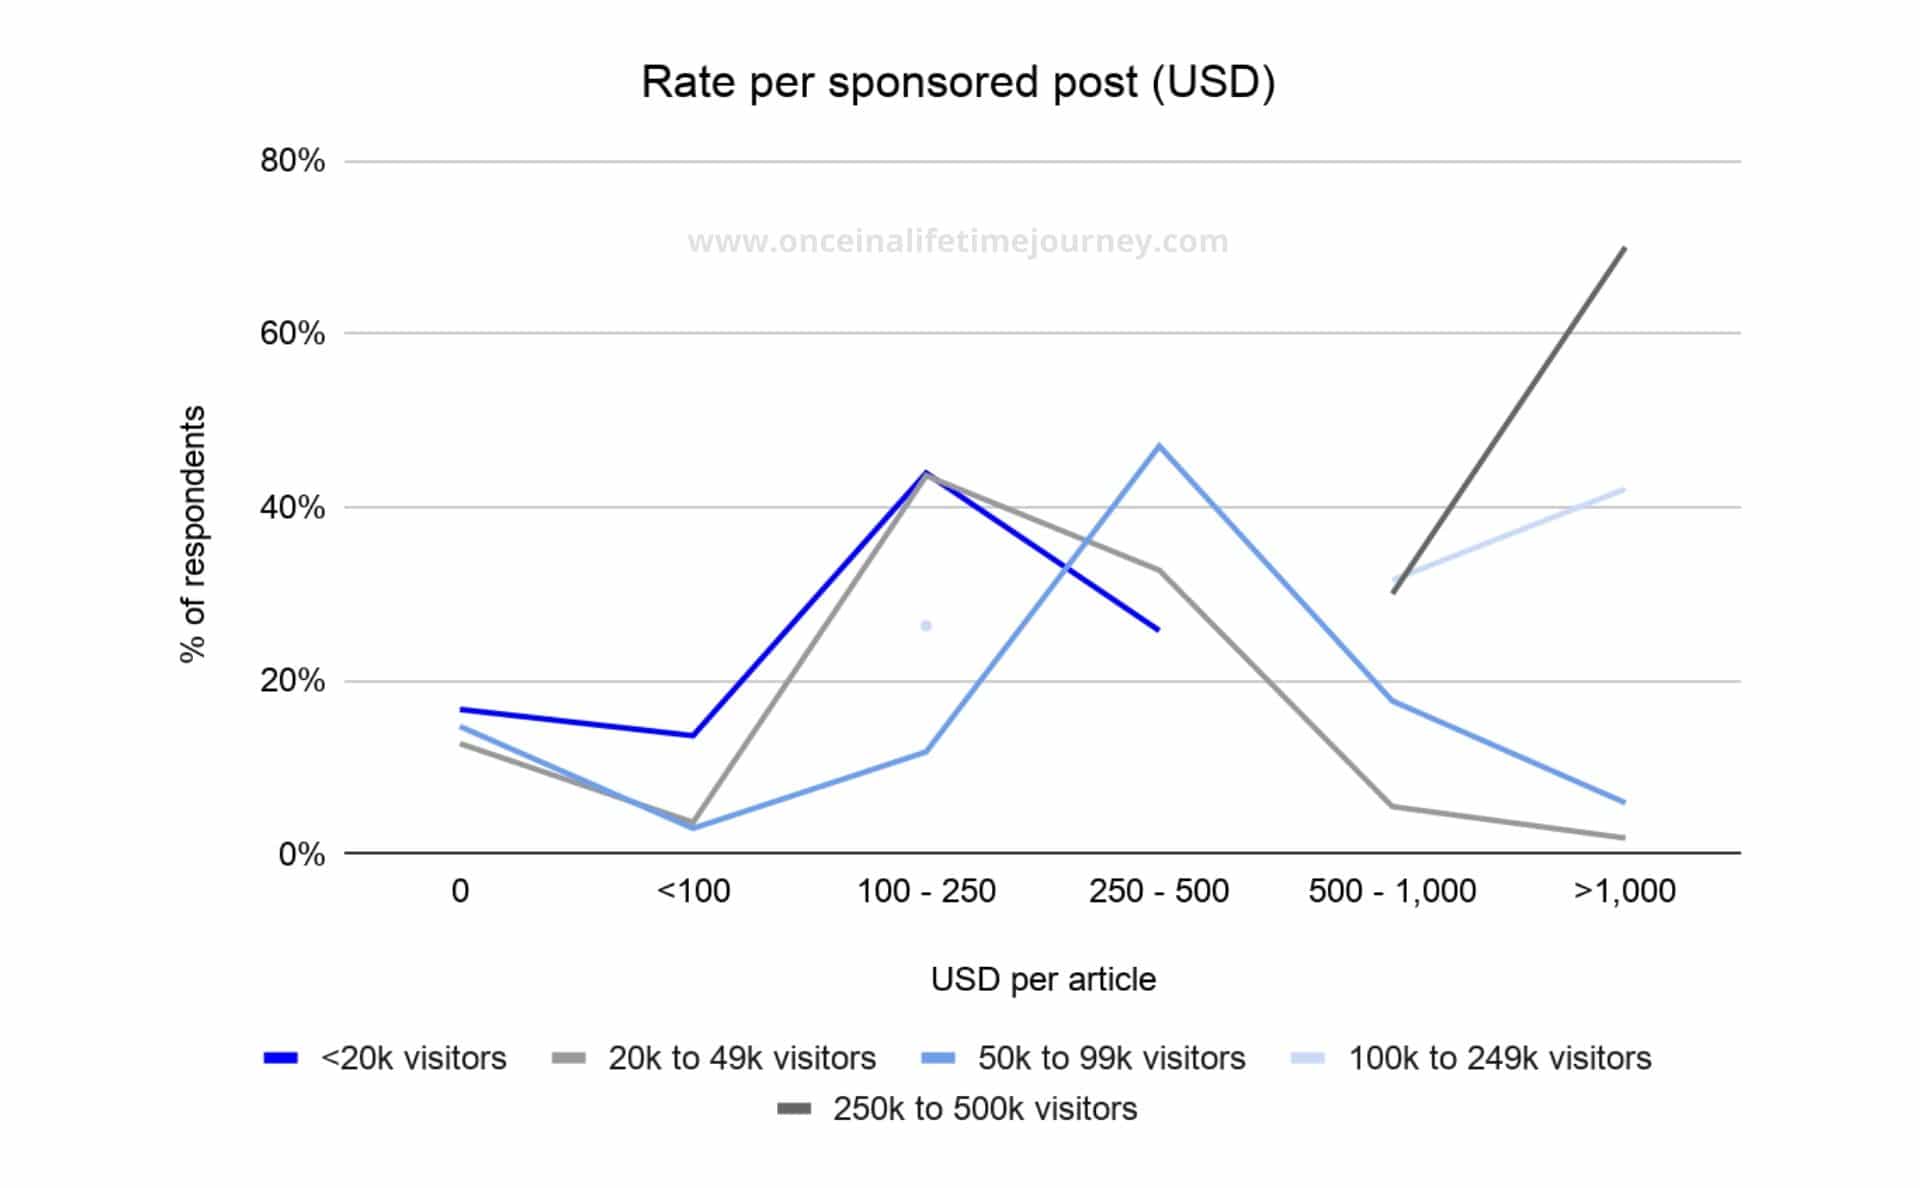 Average Rate per Sponsored Post